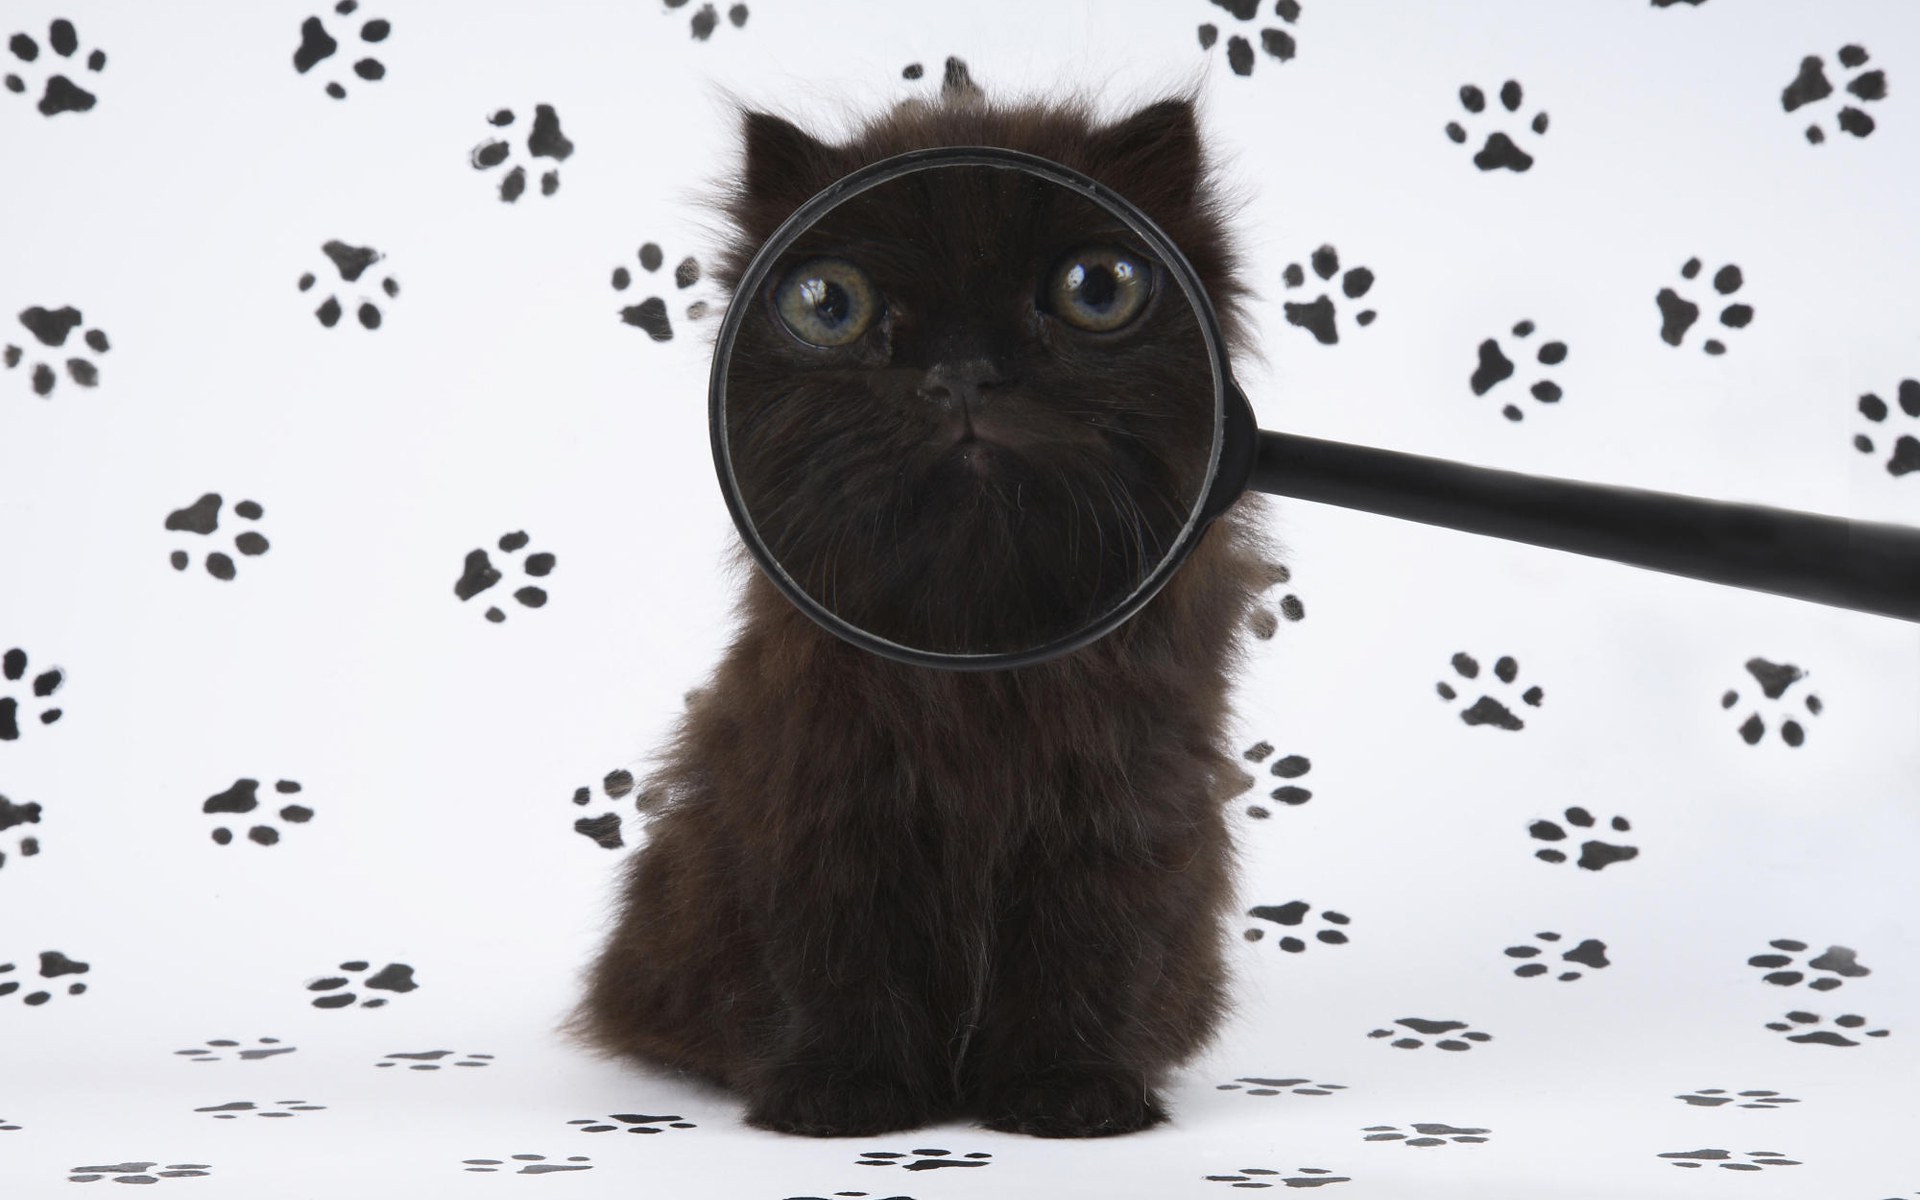 Image: Kitten, black, magnifier, muzzle, eyes, paws, traces, prints, white background